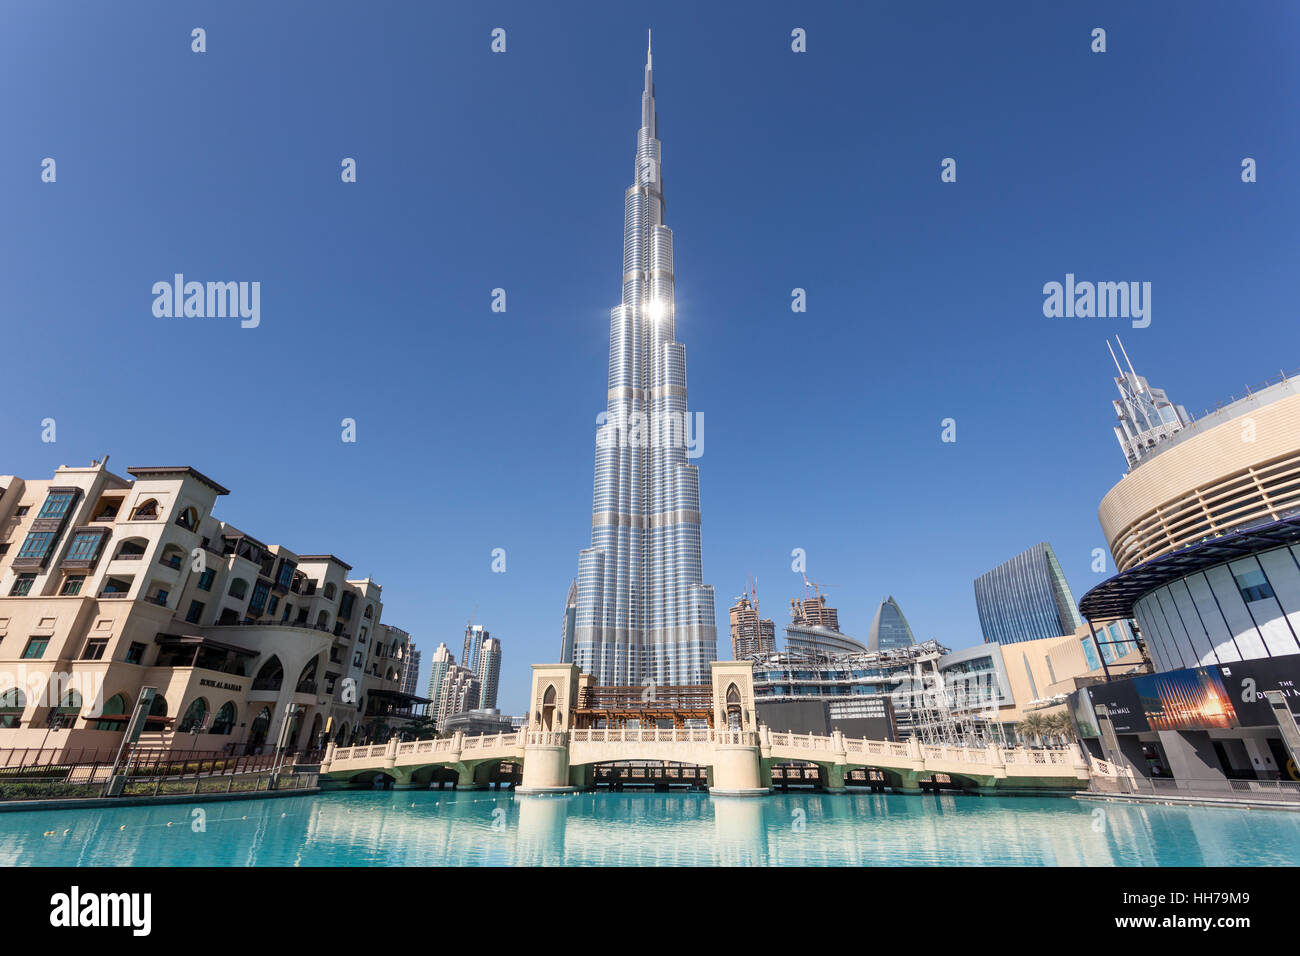 Highest skyscraper in the world - the Burj Khalifa in Dubai Stock Photo